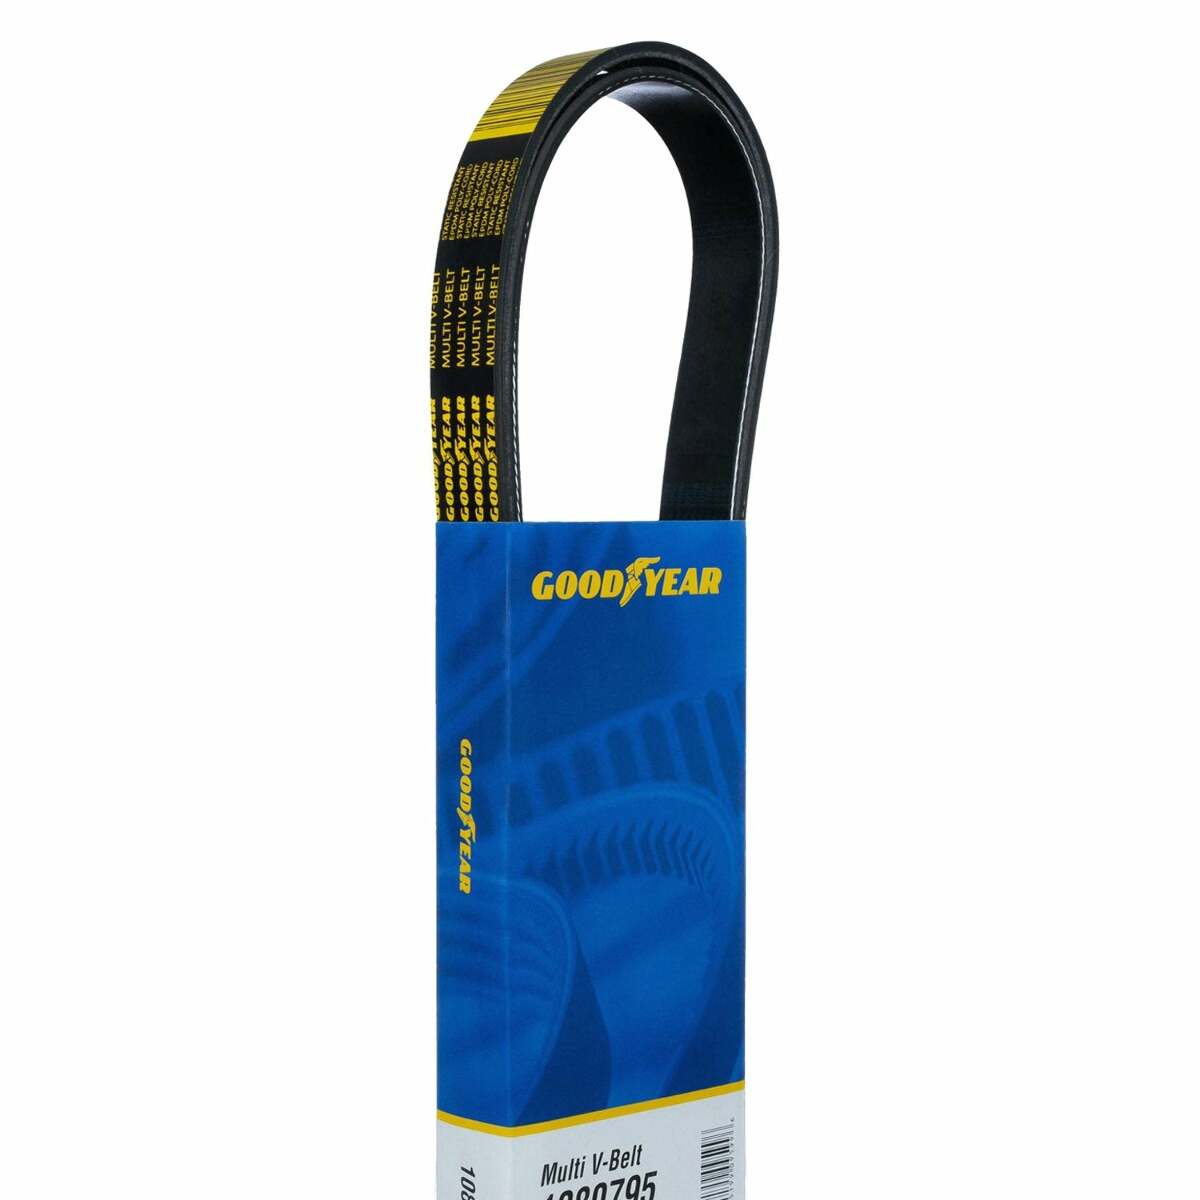 2012-2017 Caterpillar CT660 Multi V-Belt Goodyear 1080732